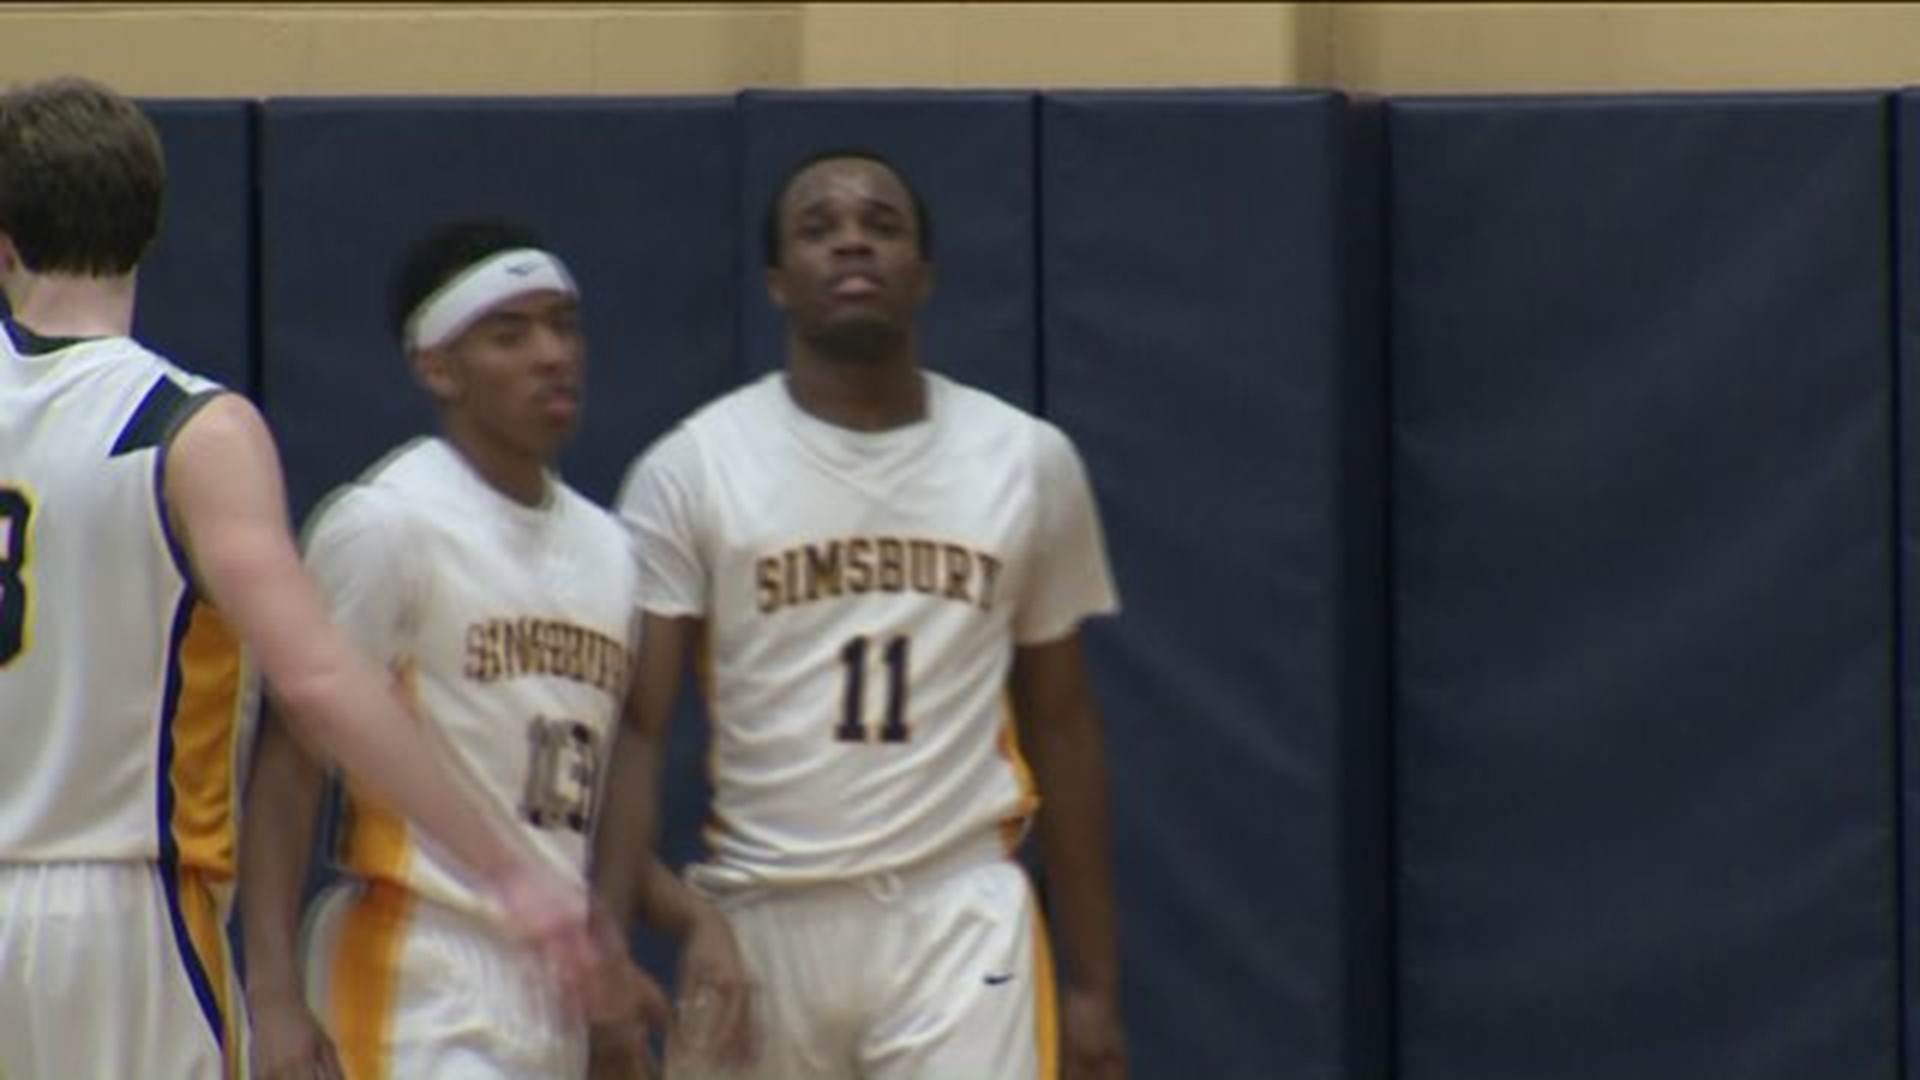 Simsbury vs East Hartford high school boy`s basketball